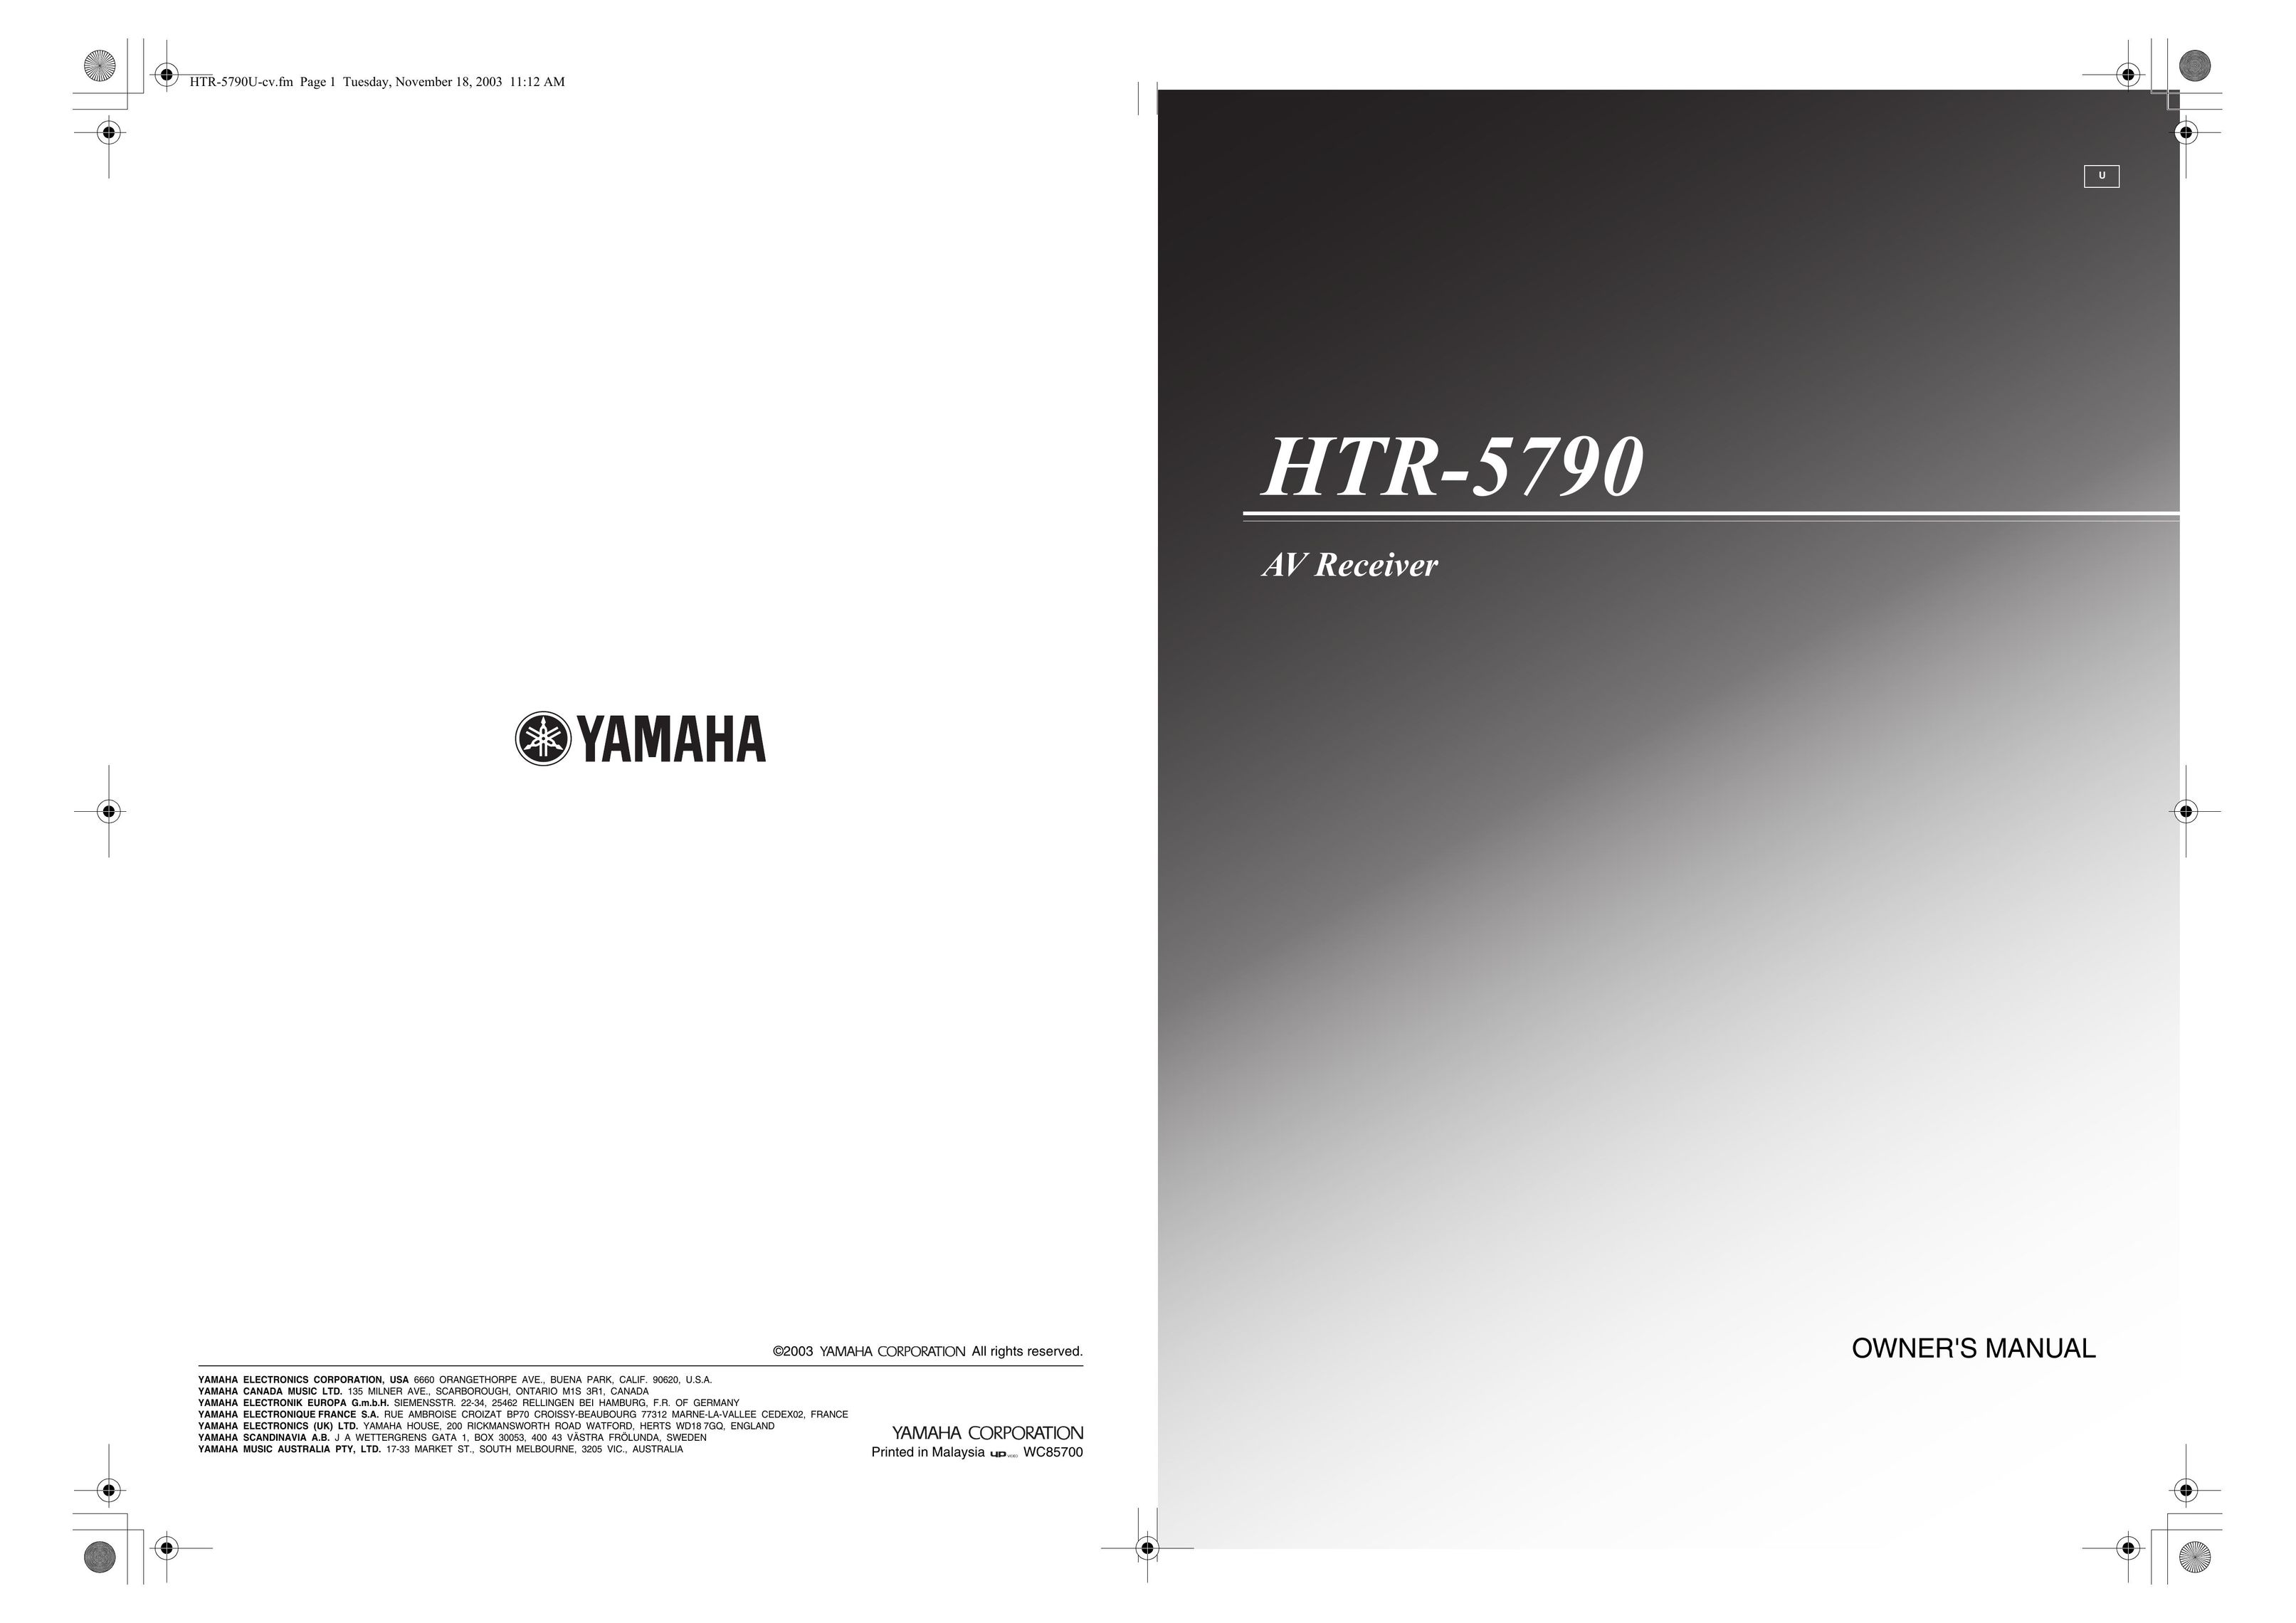 Yamaha HTR-5790 Stereo Receiver User Manual